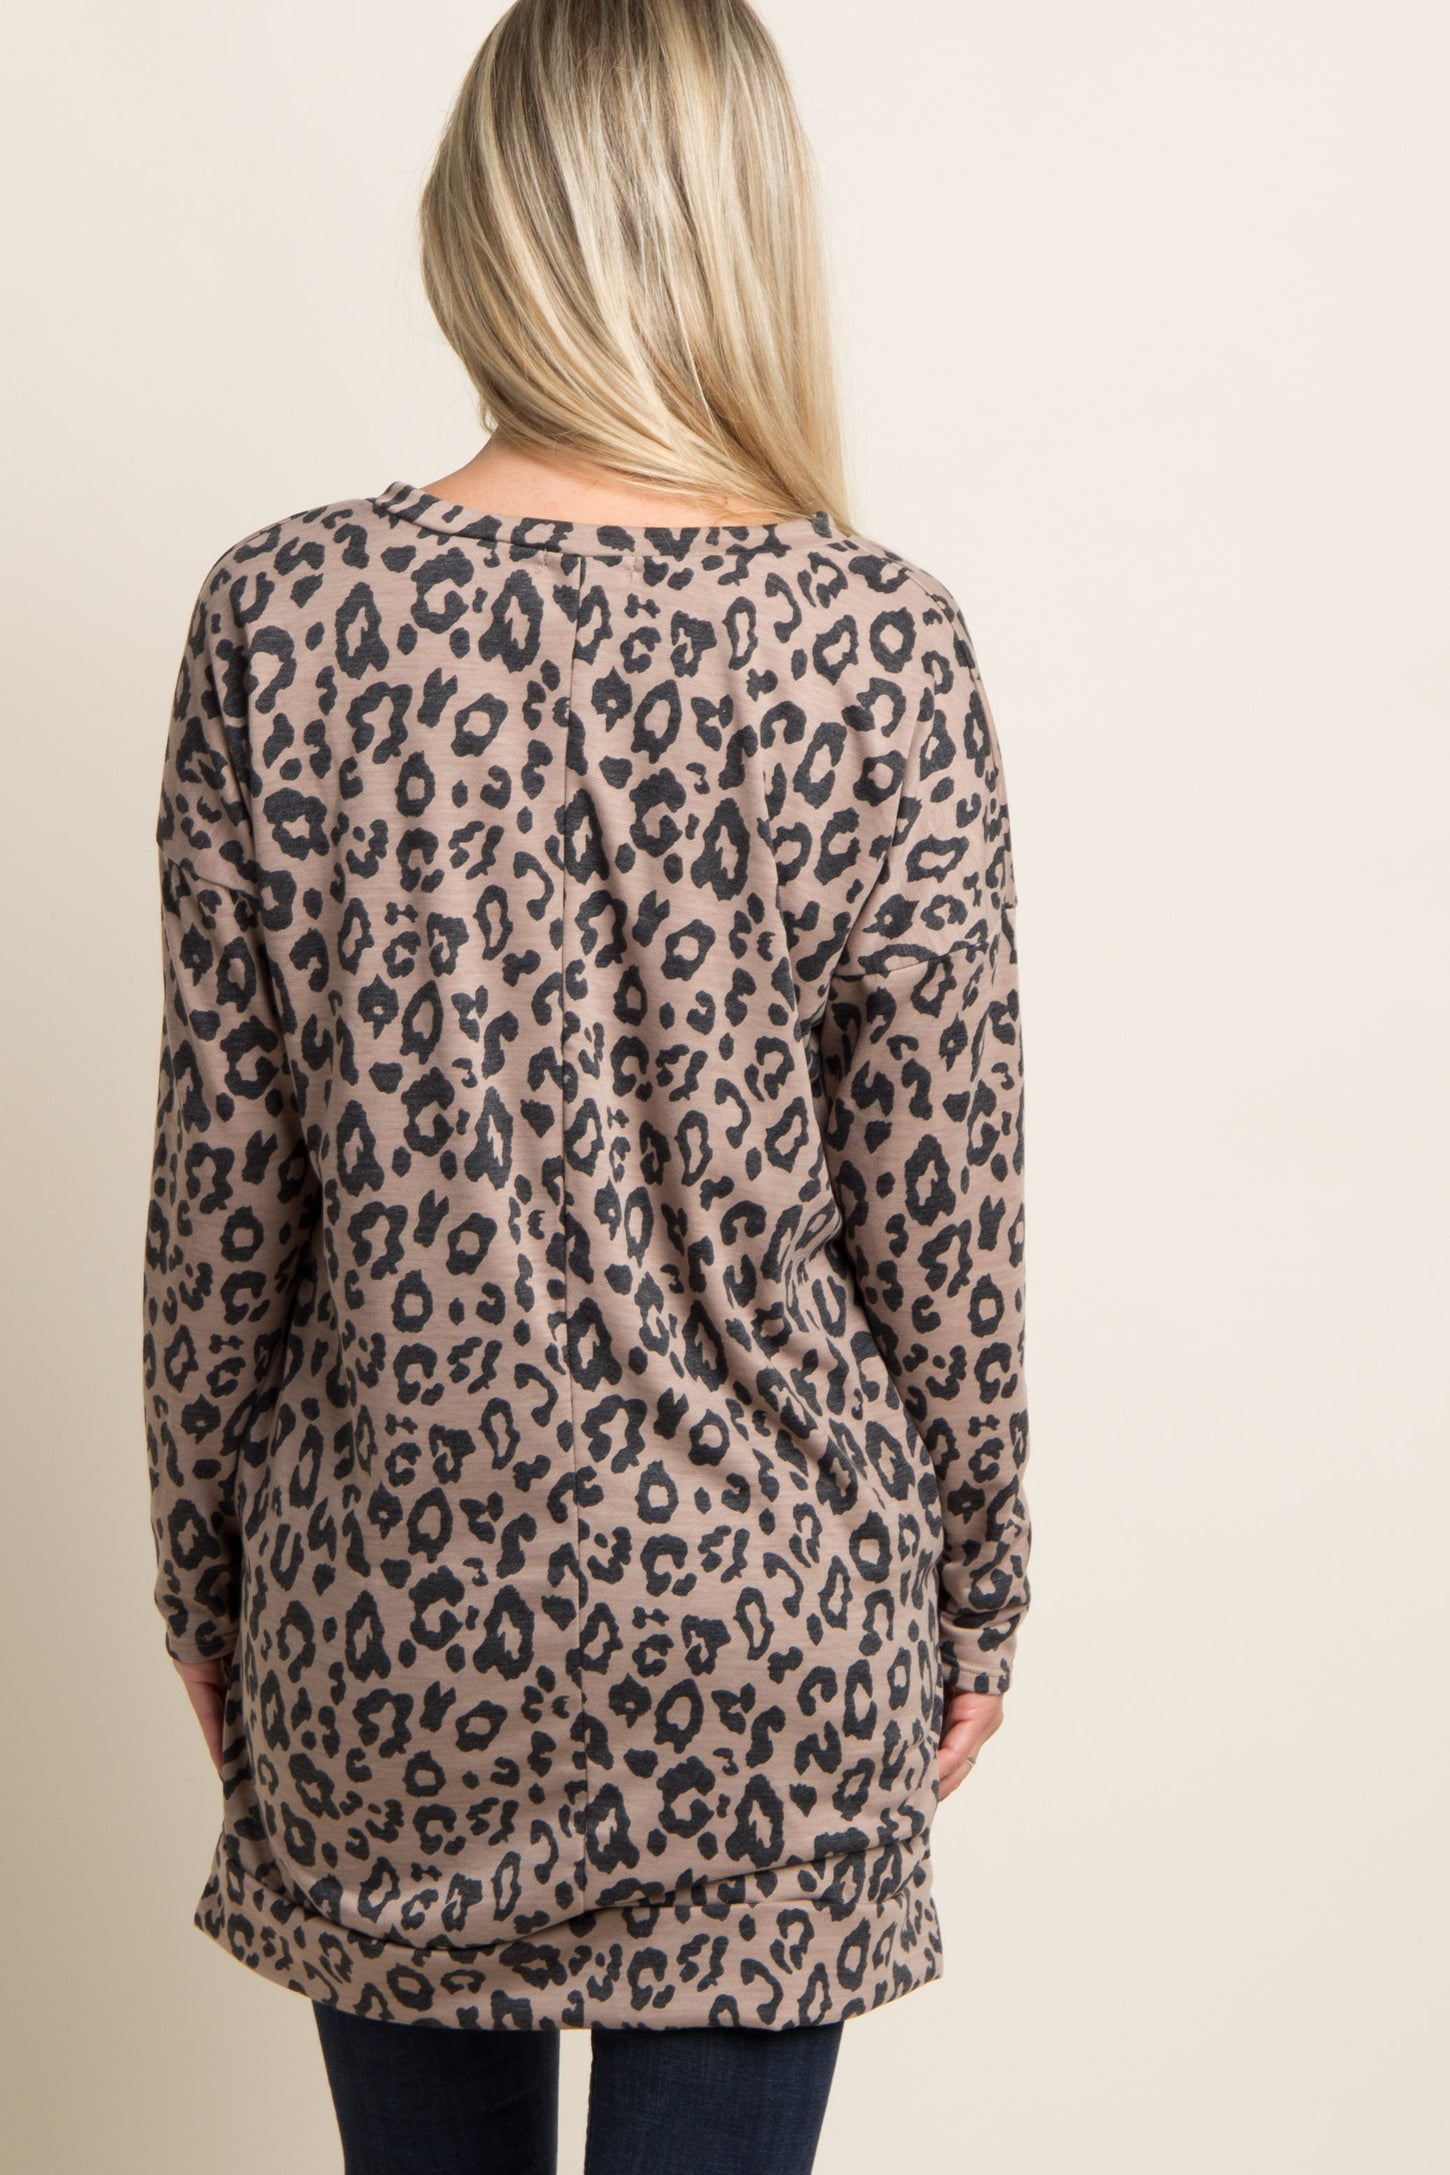 Mocha Cheetah Print V-Neck Maternity Sweater